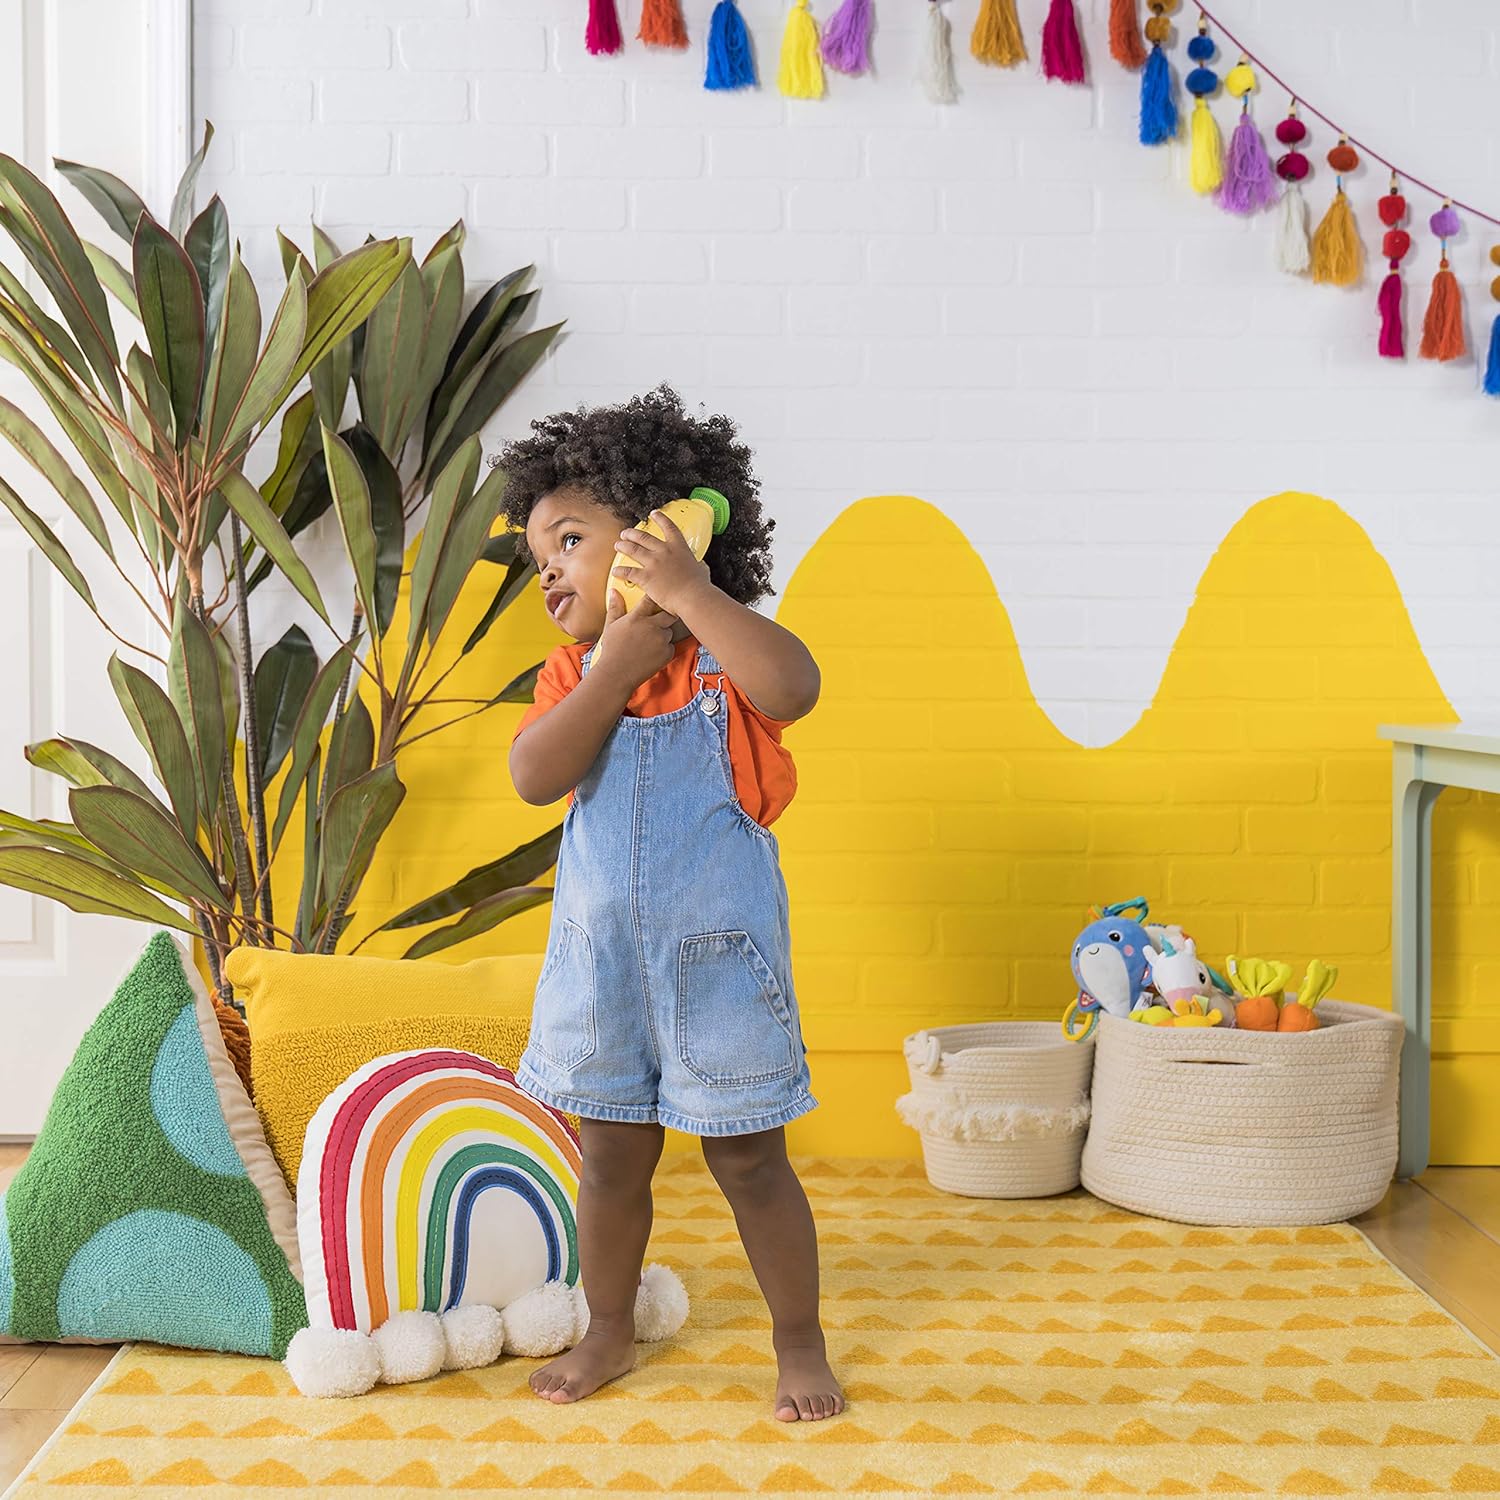 Bright Starts Babblin’ Banana Ring & Sing Light-Up Musical Baby Toy Flip Phone, 6 Months+